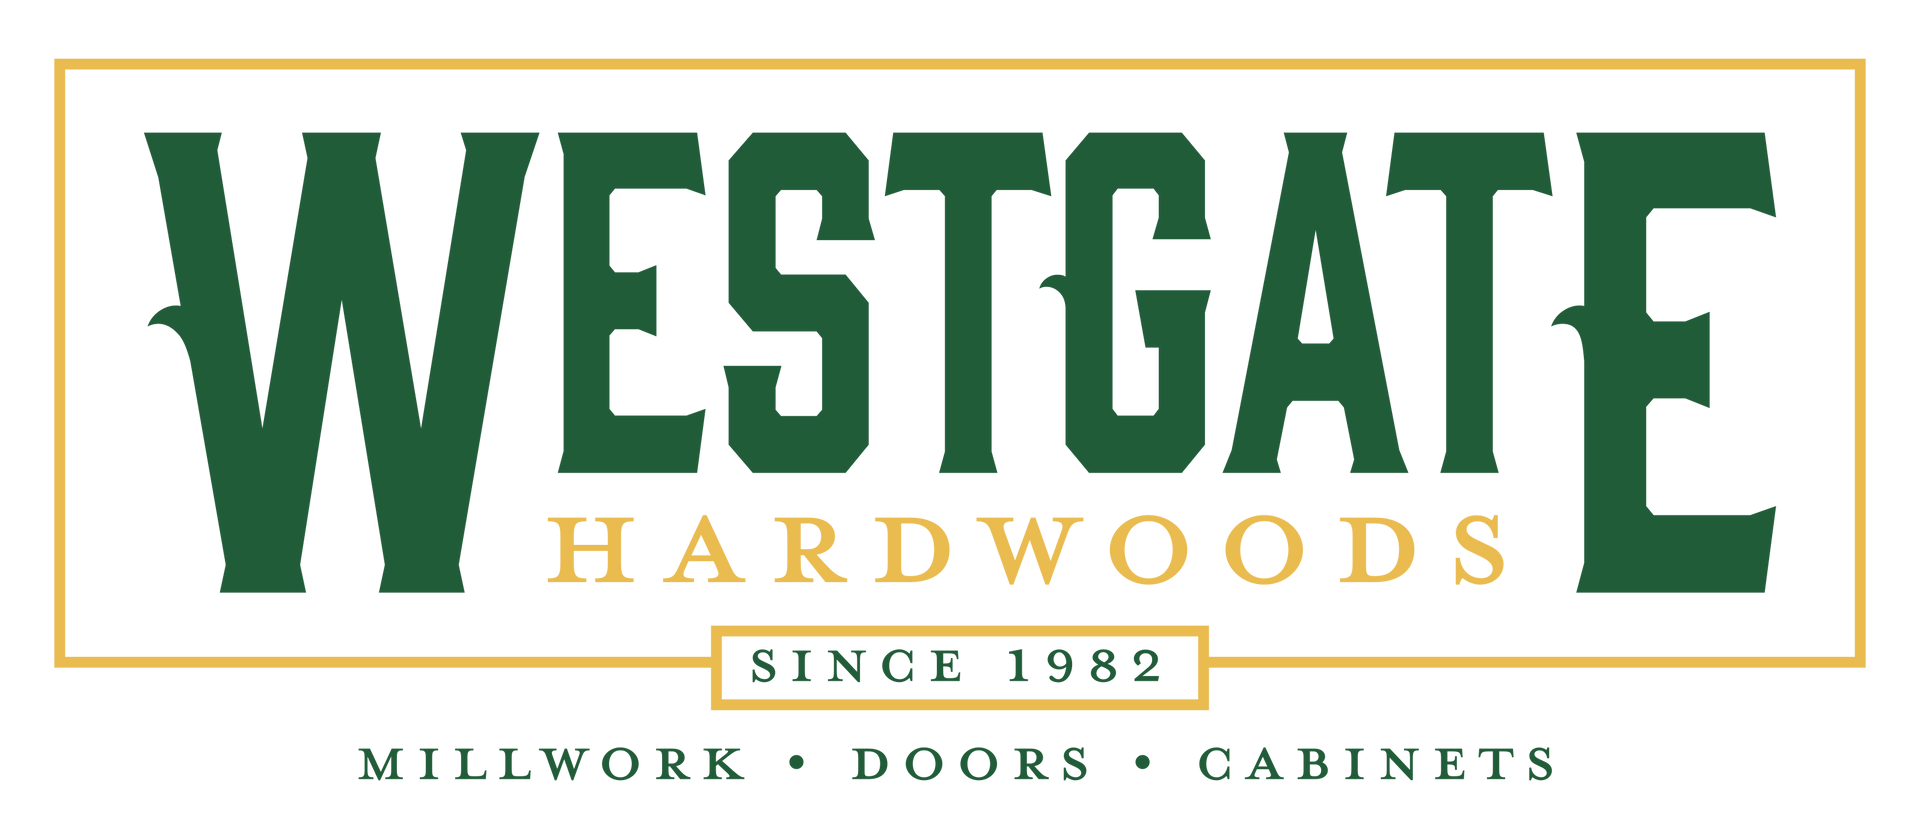 Westgate Hardwoods